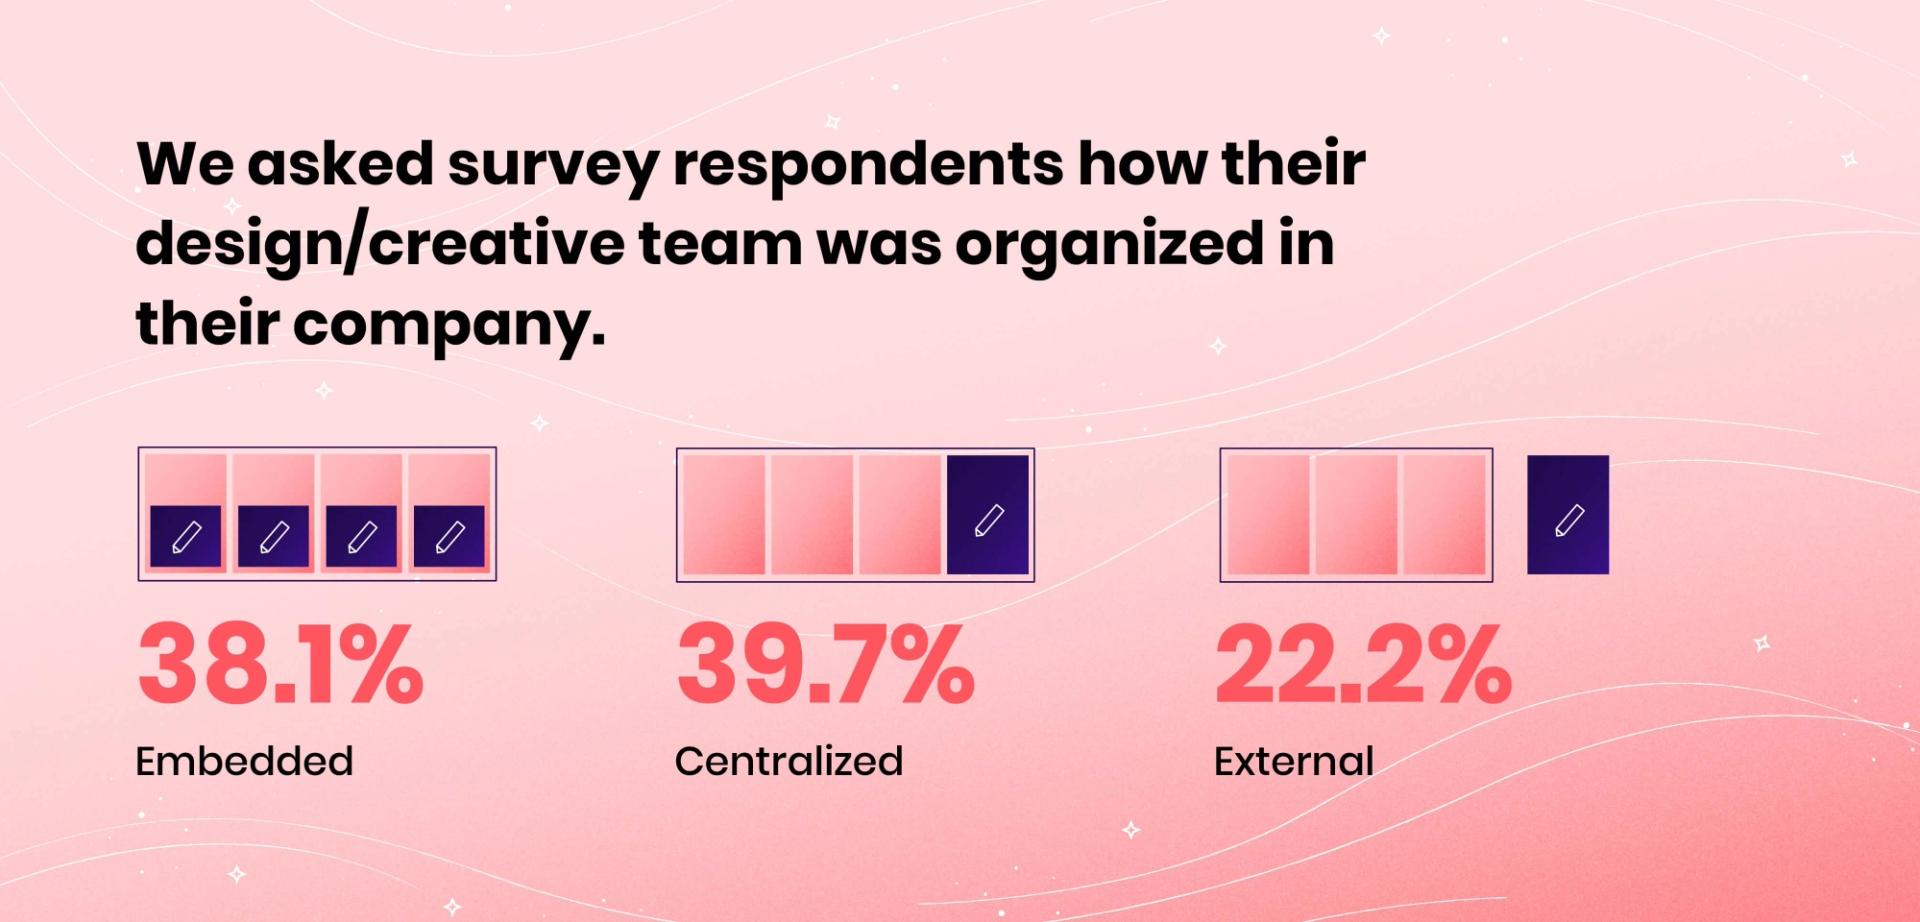 Survey for design/creative team organizations